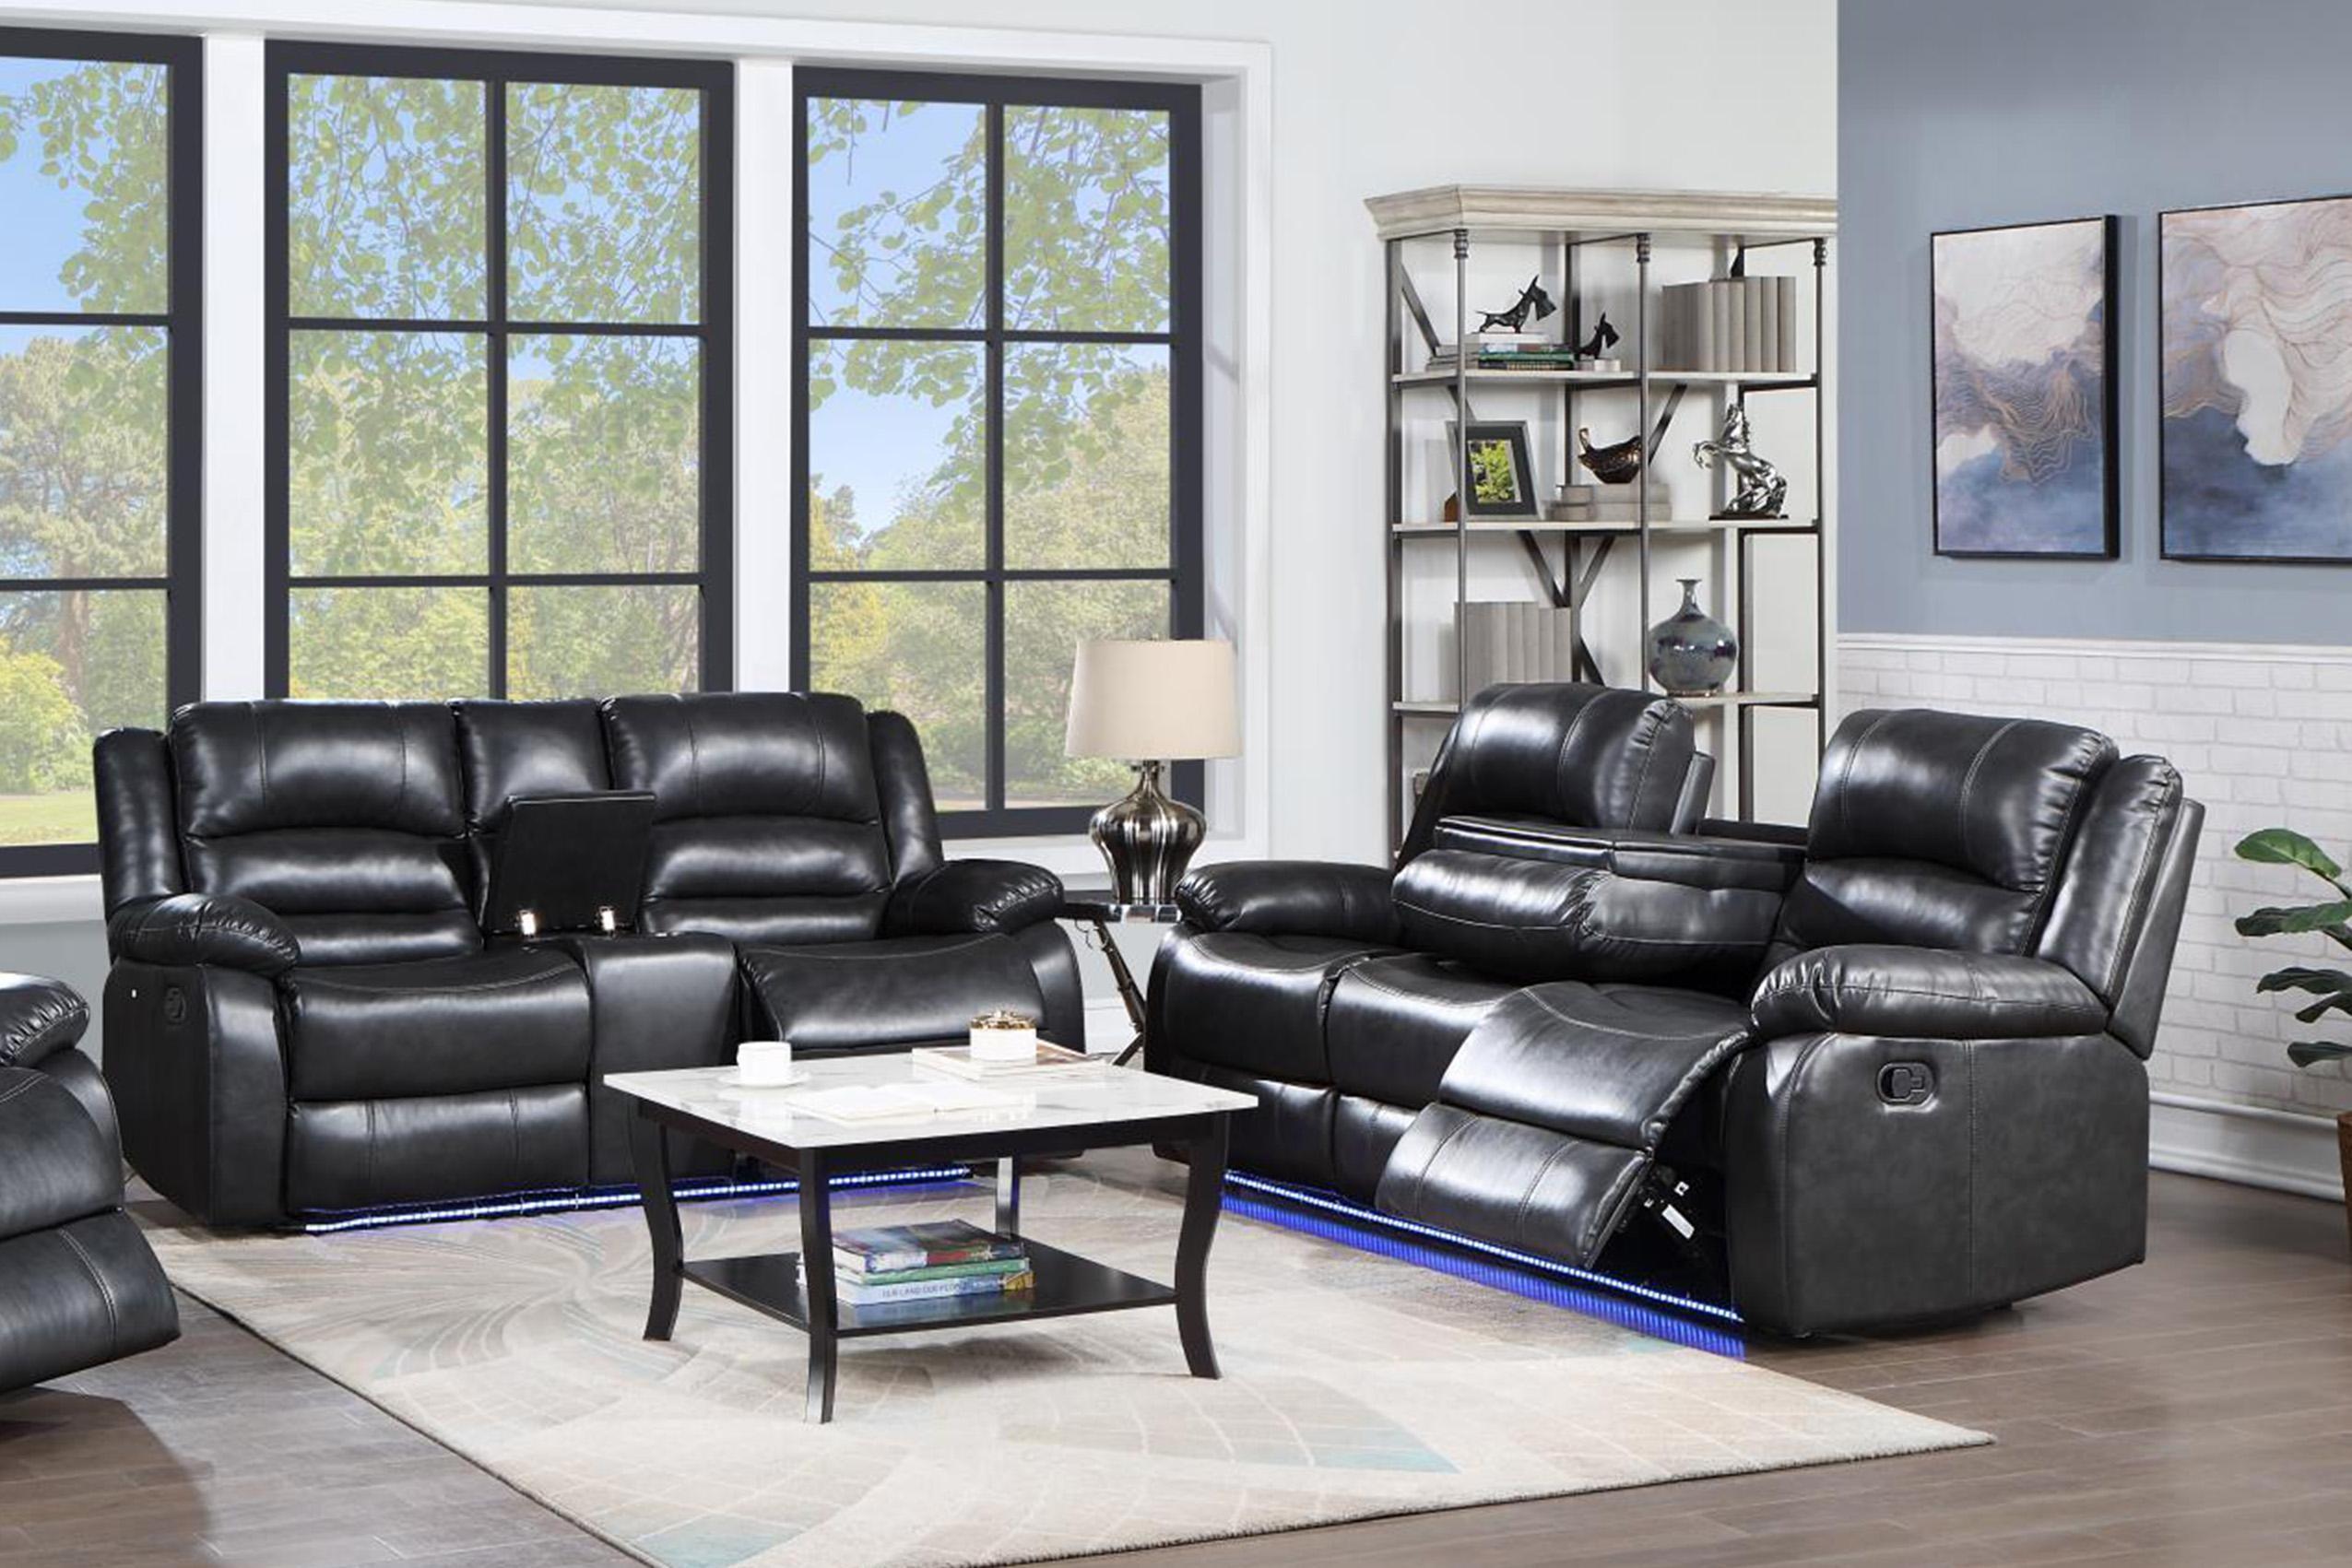 Contemporary, Modern Recliner Sofa Set MARTIN BK MARTIN-BK-S-L in Black Faux Leather